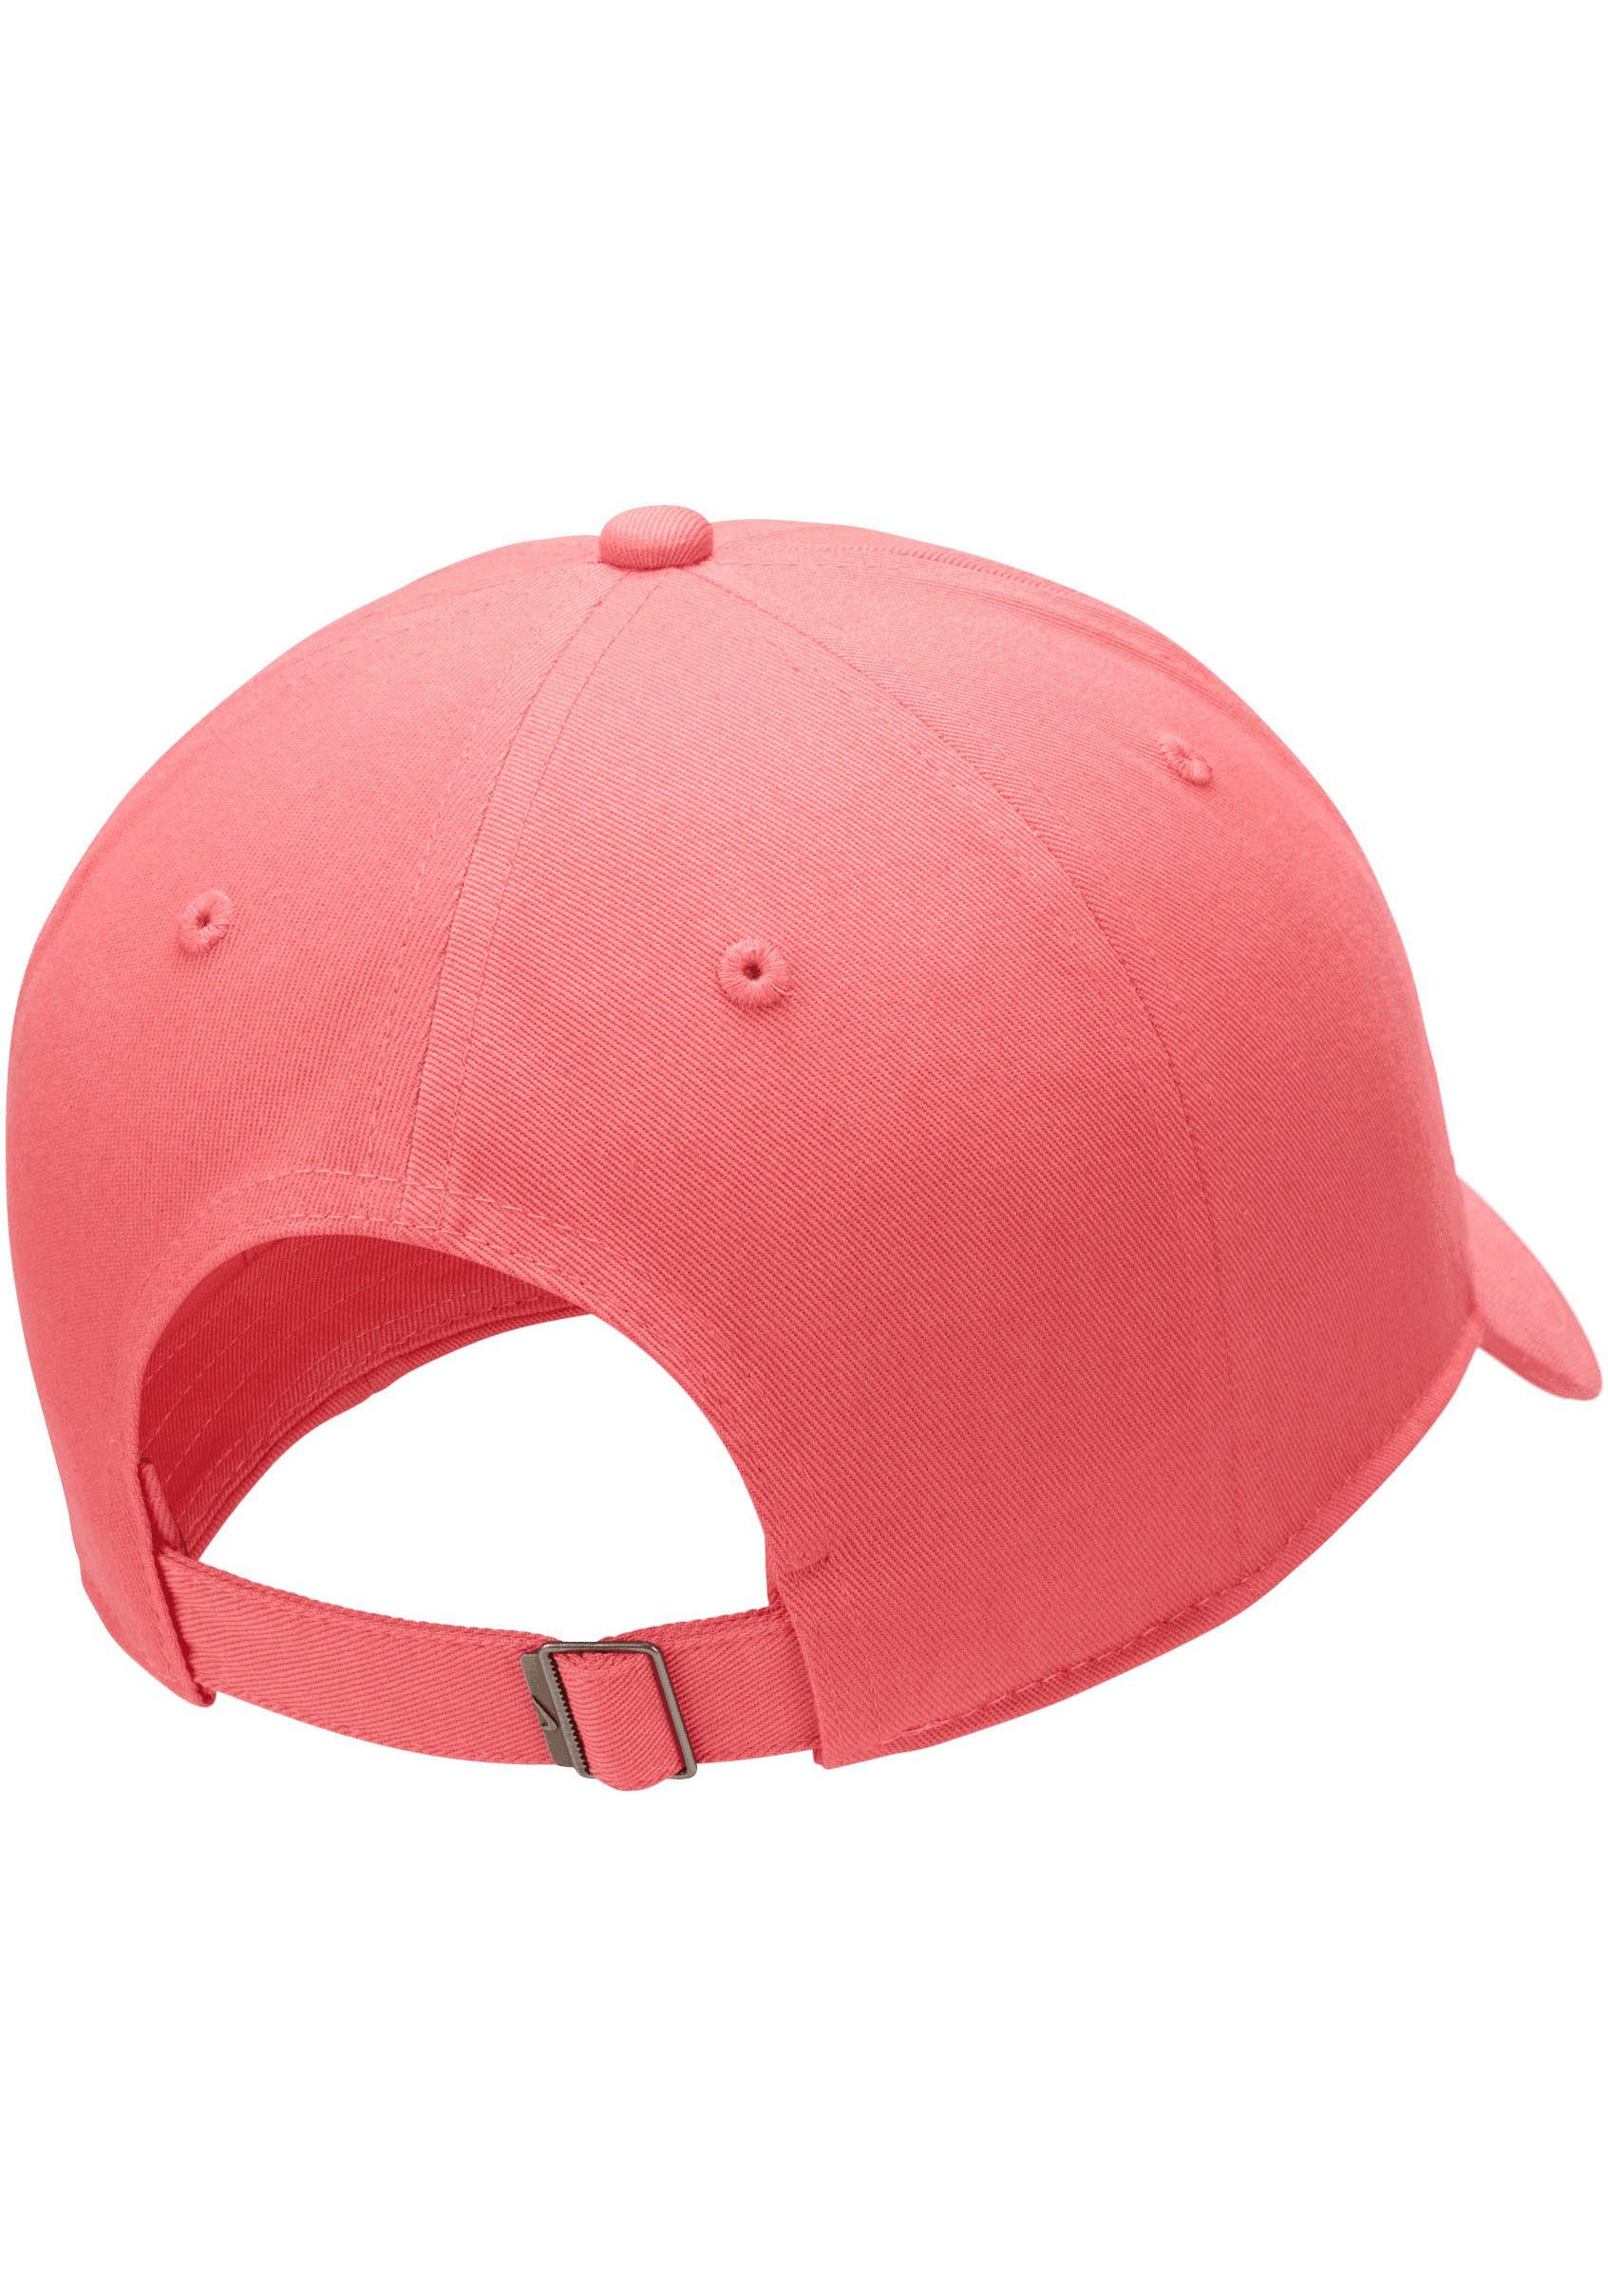 Nike Sportswear Baseball Cap Washed Futura Heritage orange Hat